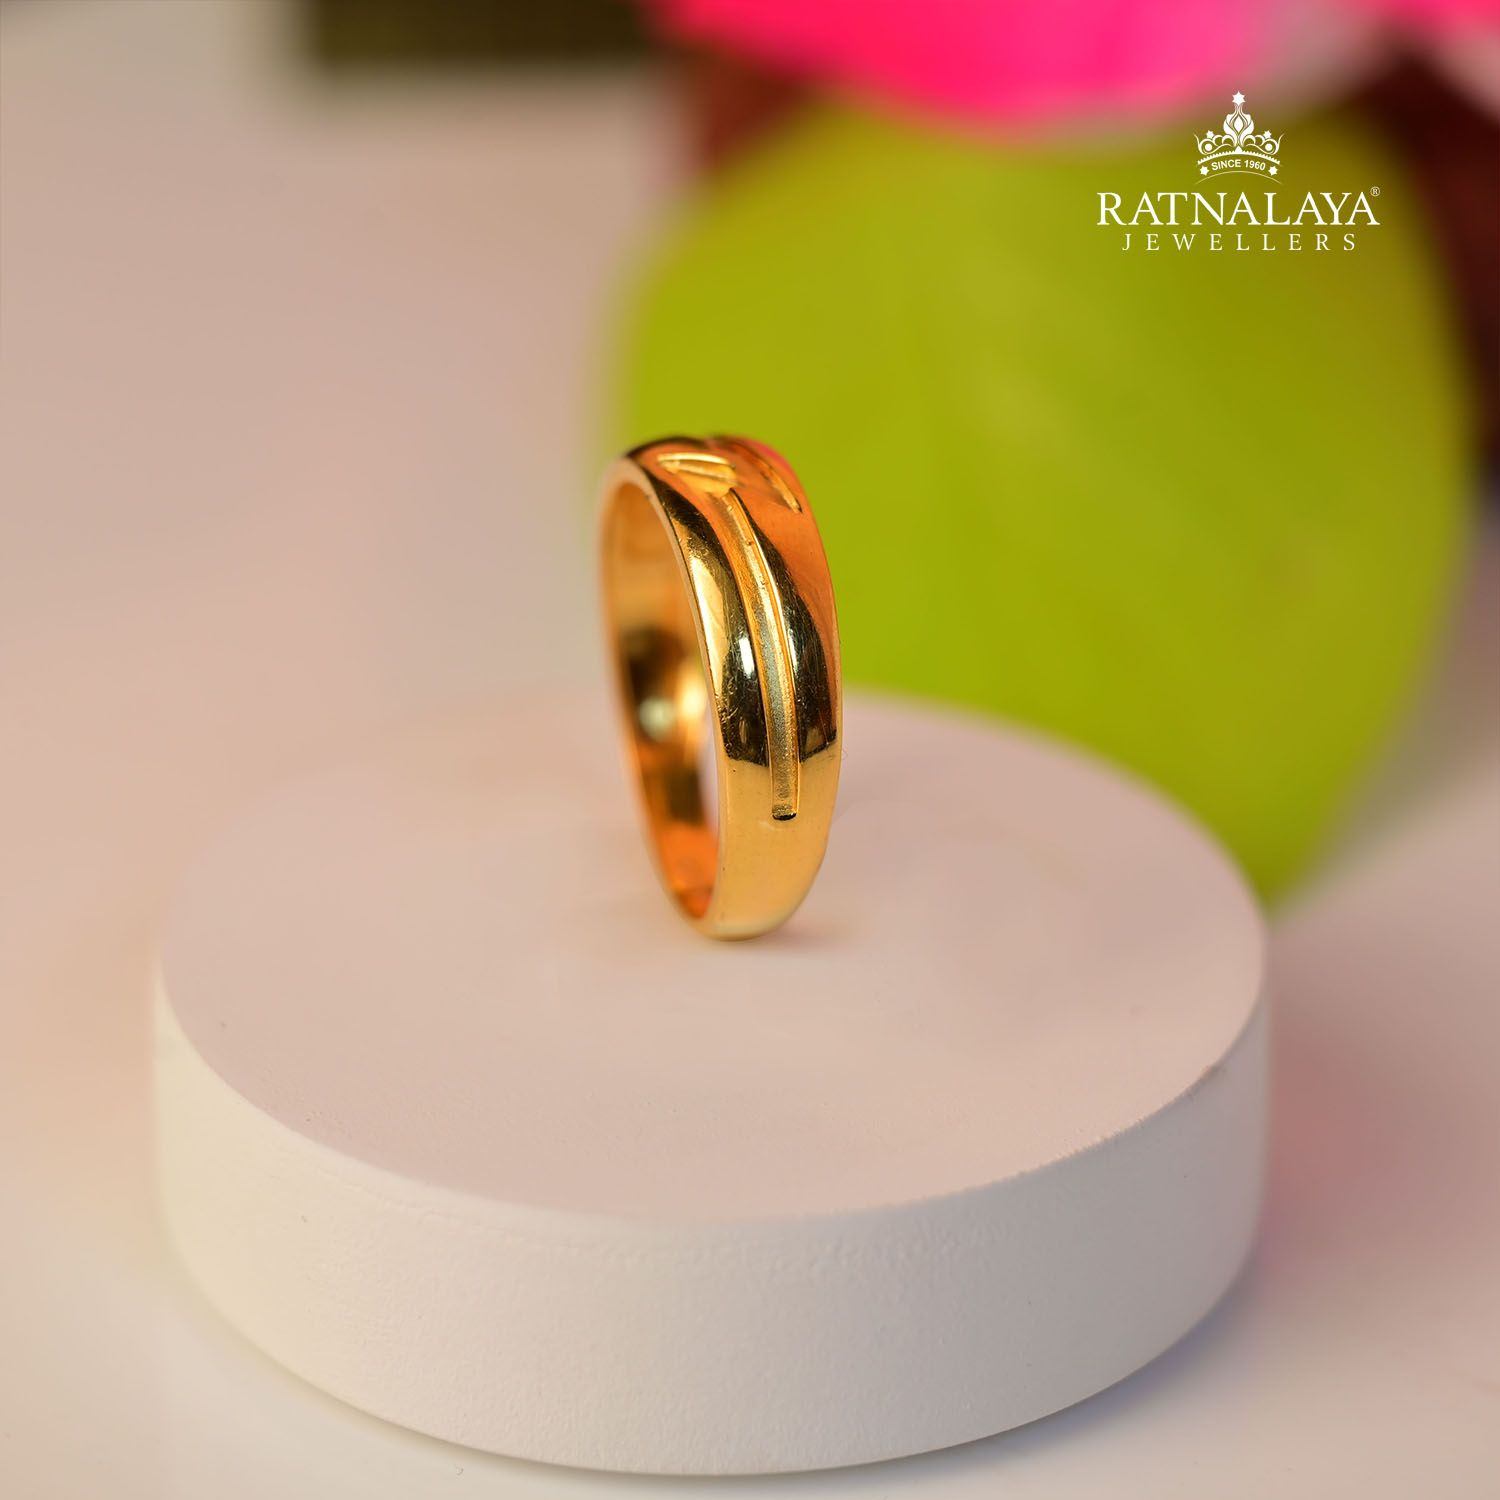 1 Gram Gold Plated Om With Diamond Sophisticated Design Ring For Men -  Style B267, सोने का पानी चढ़ी हुई अंगूठी - Soni Fashion, Rajkot | ID:  2850403420097